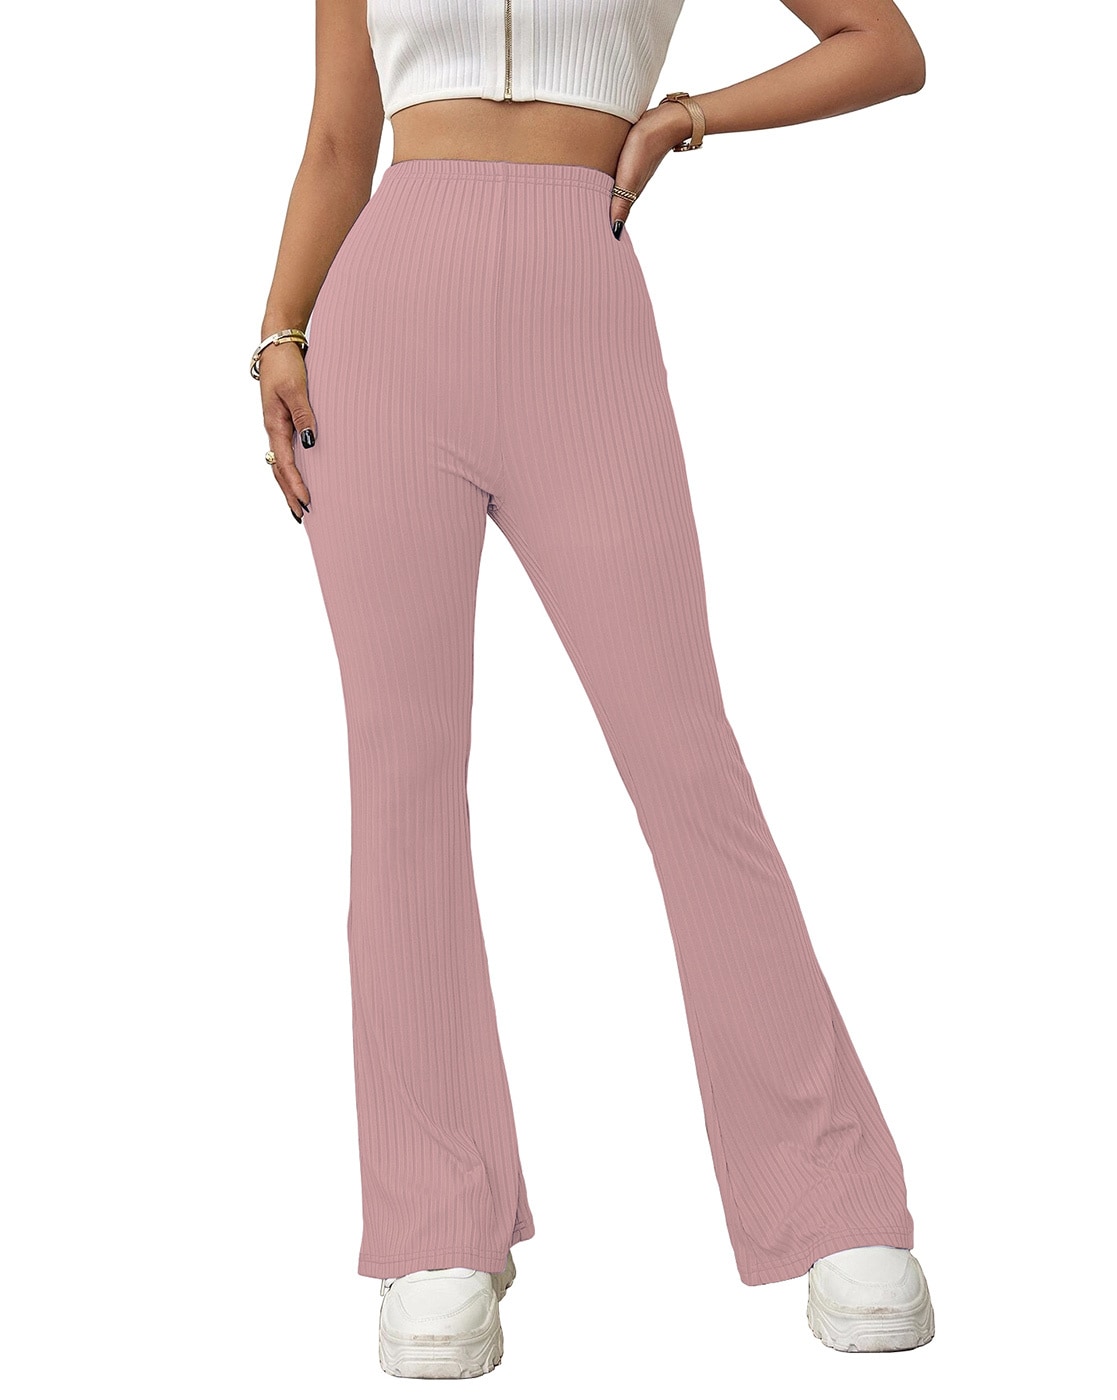 Buy Women's Pink Flared Lounge Pants Online